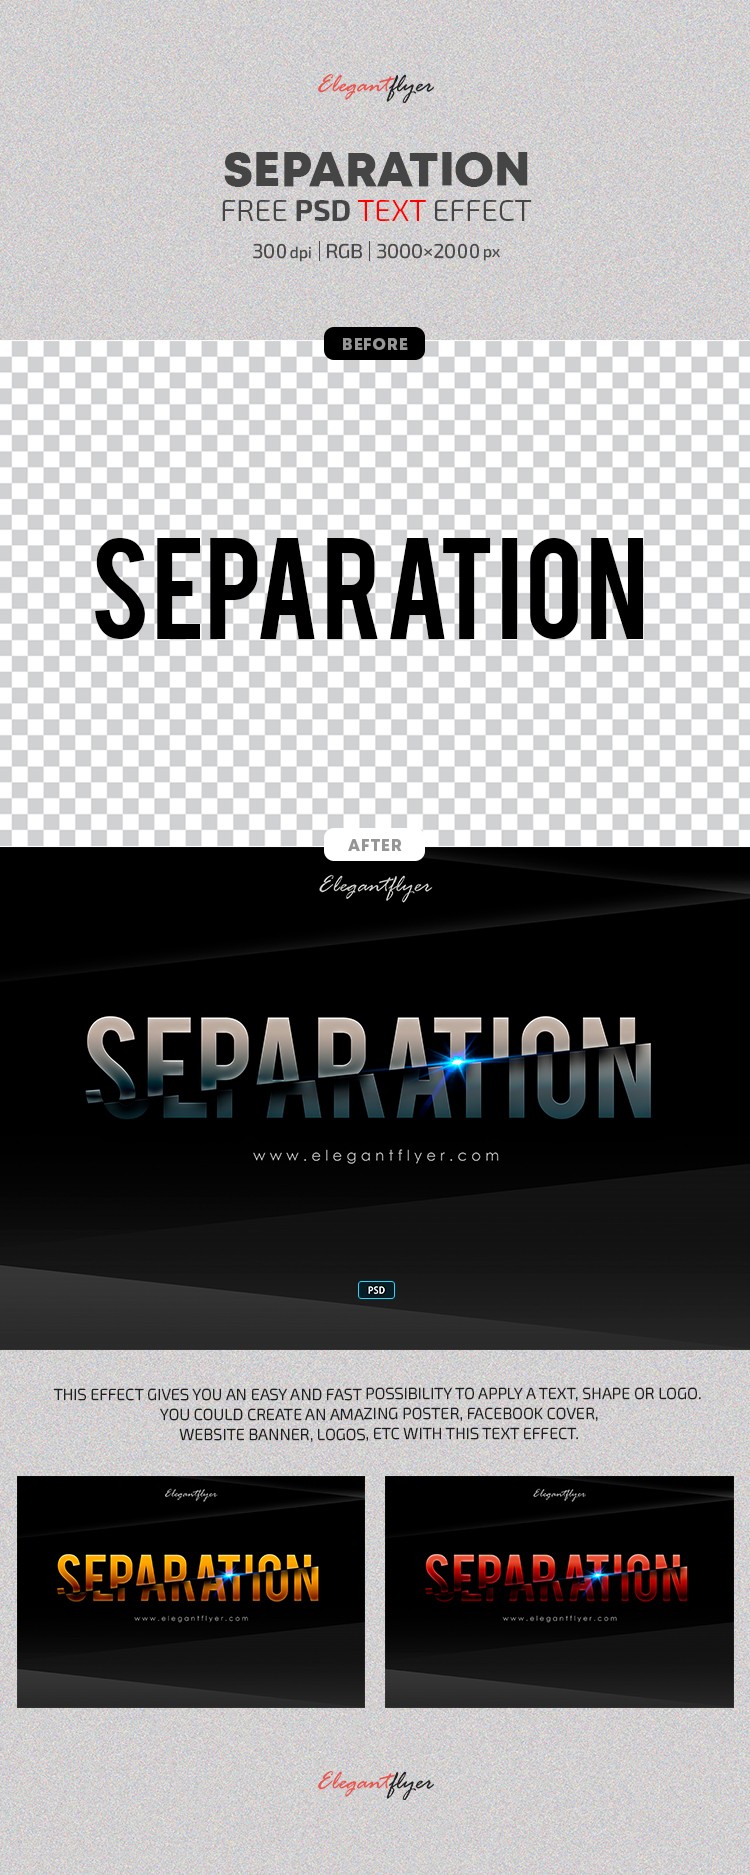 Separation Text Effect by ElegantFlyer